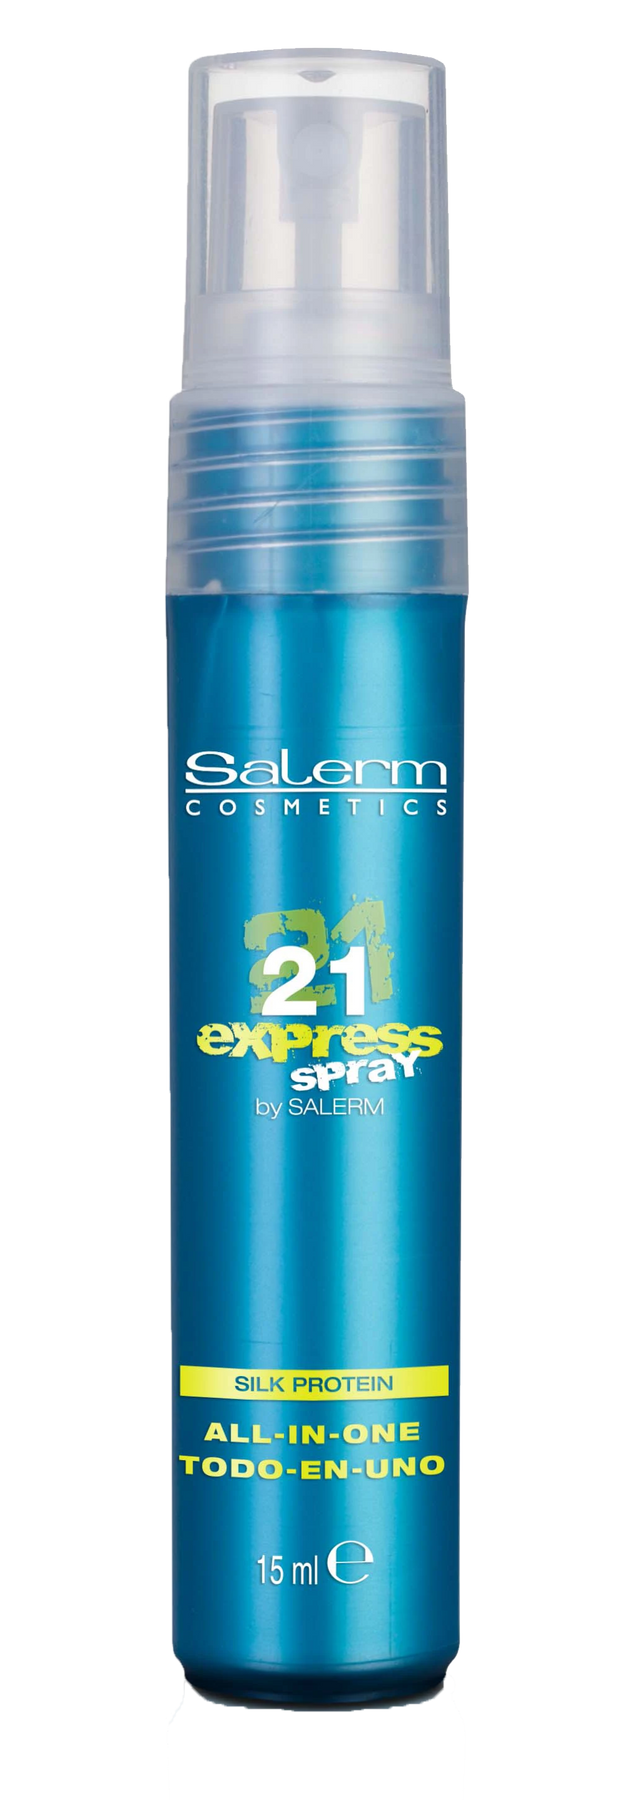 Salerm 21 pack x 3 finish champú express spray